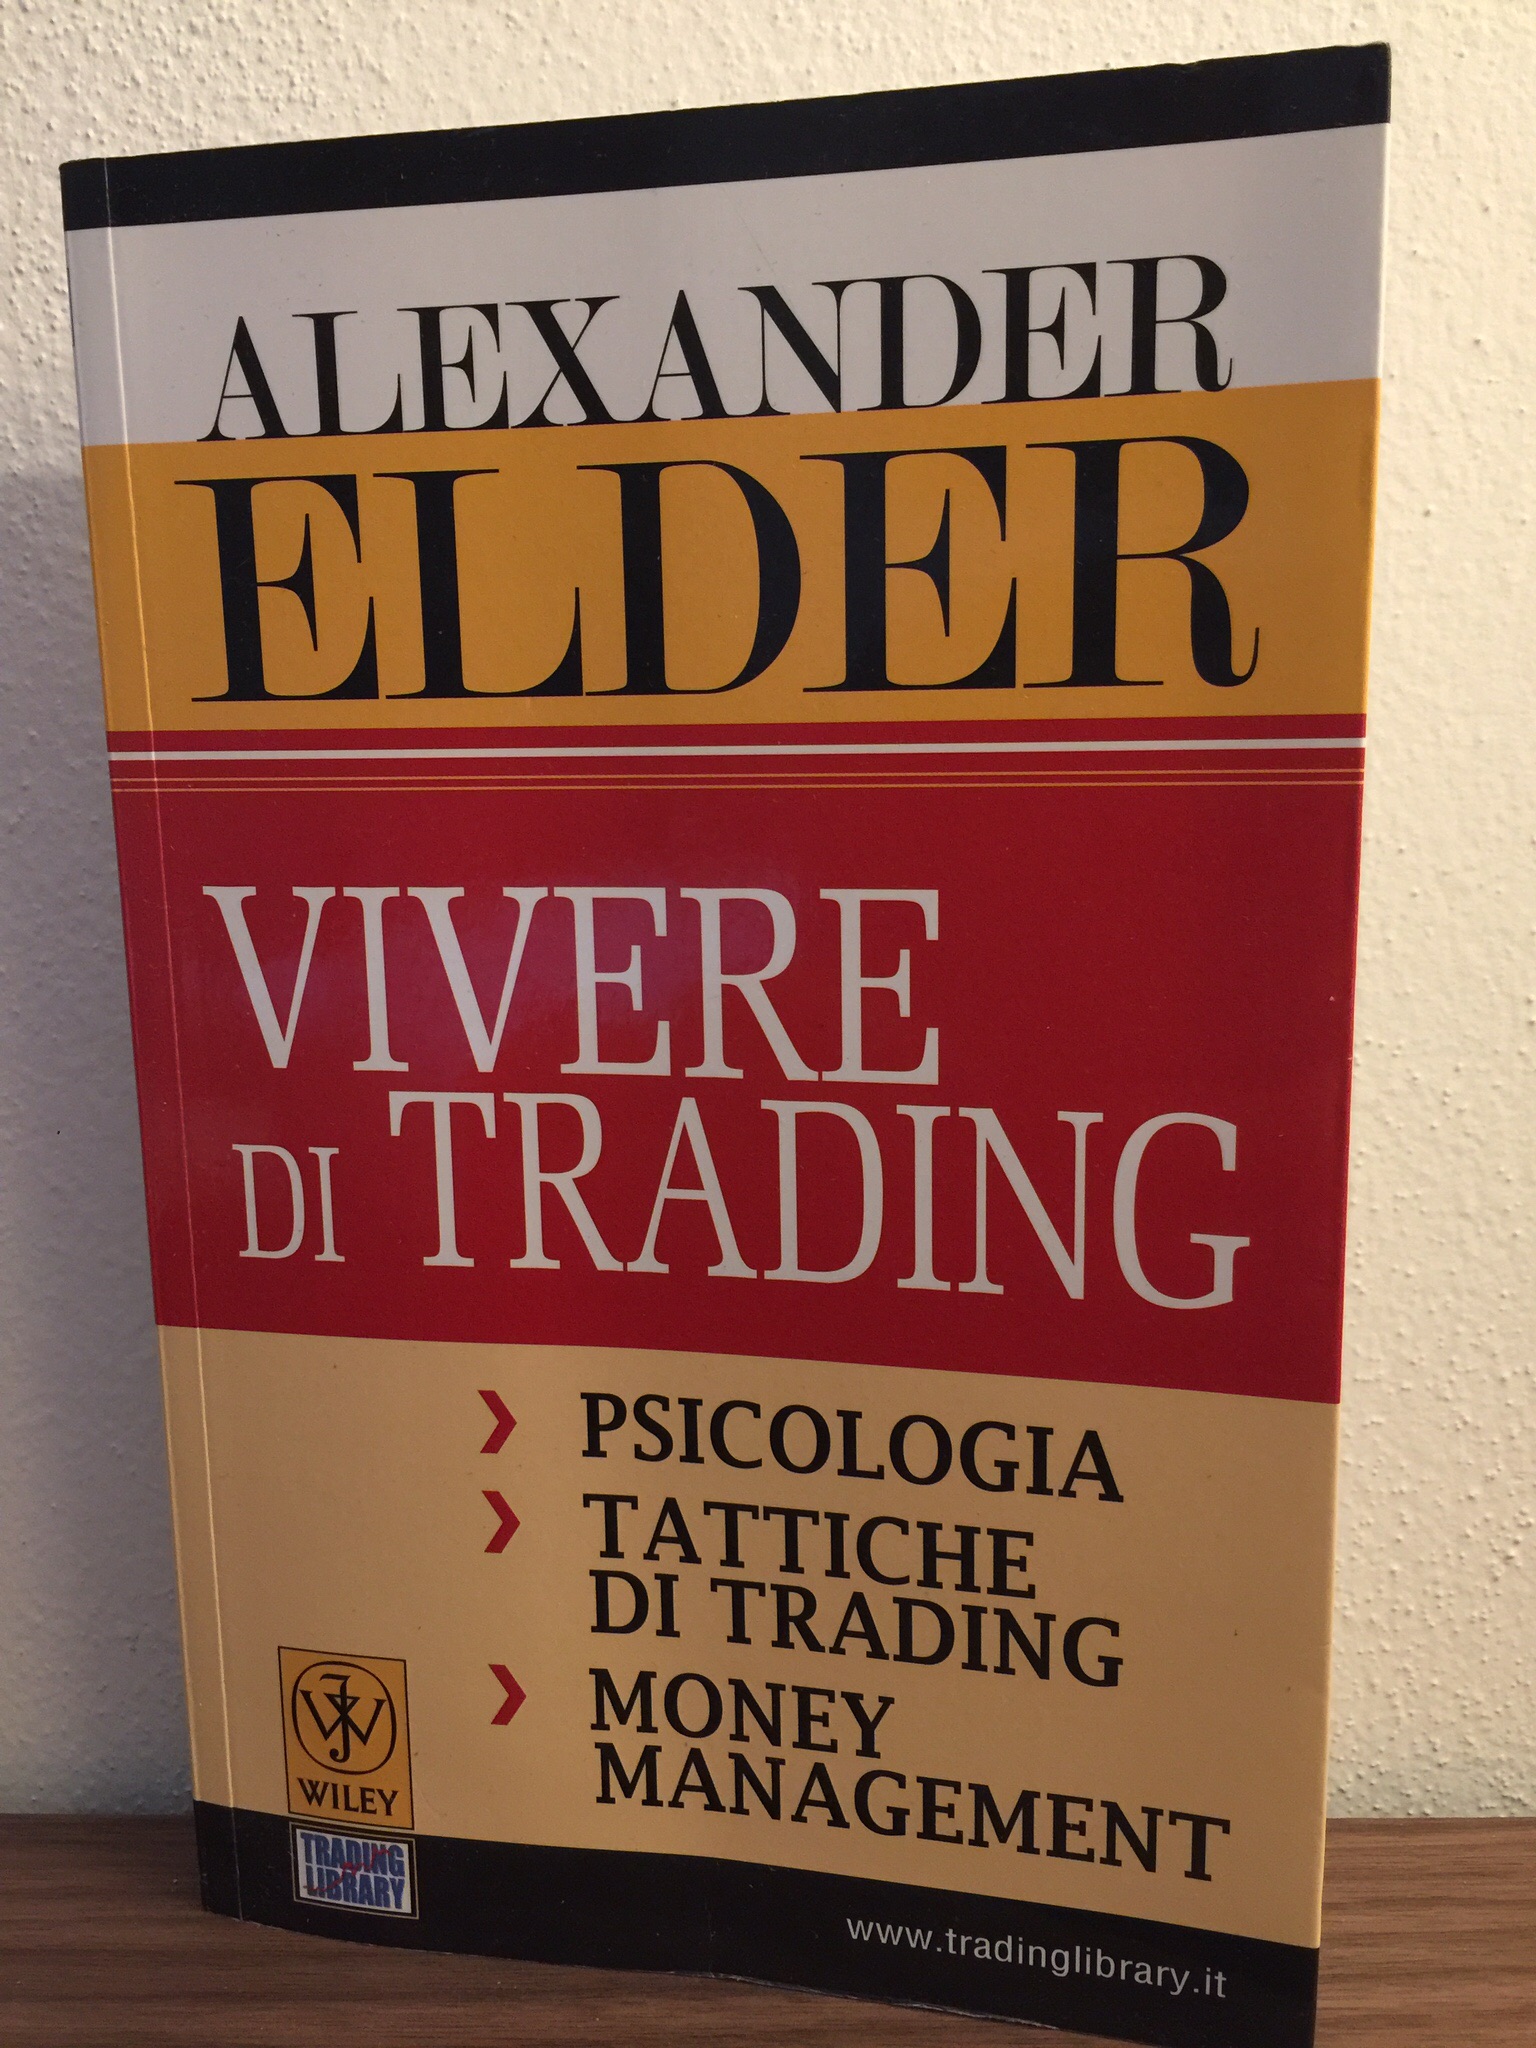 Alexander Elder – Vivere di Trading